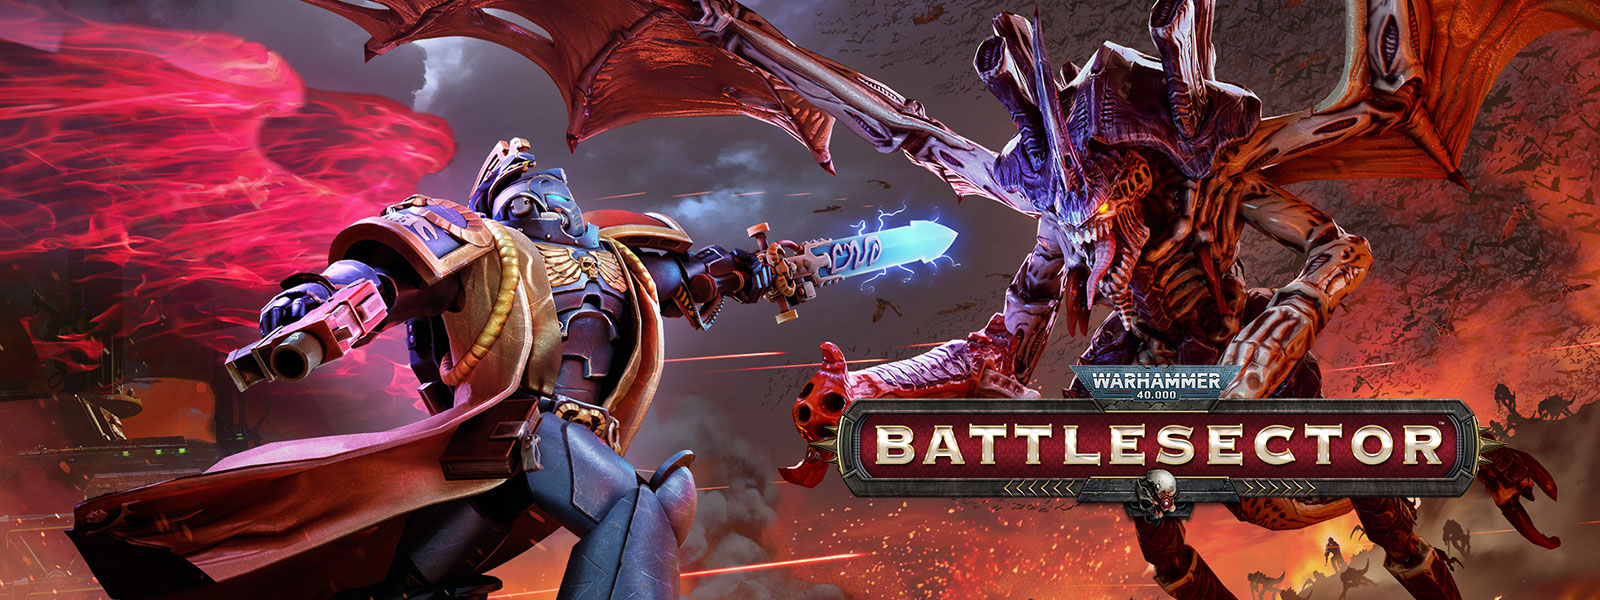 Warhammer 40,000 : Battlesector, un Librarian affronte le Hive Tyrant dans un combat.